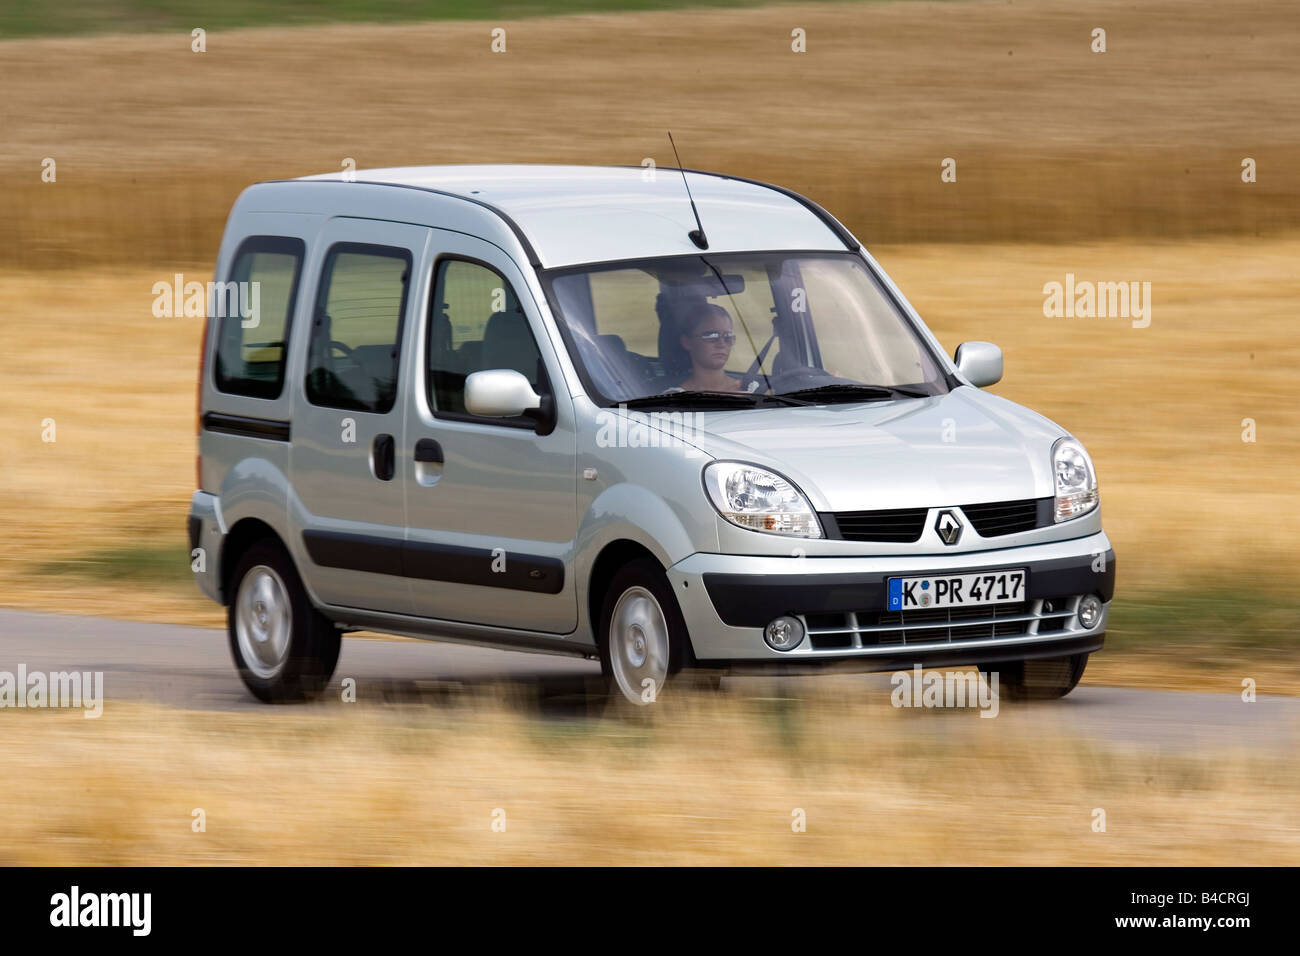 Renault kangoo 1 5 dci hi-res stock photography and images - Alamy